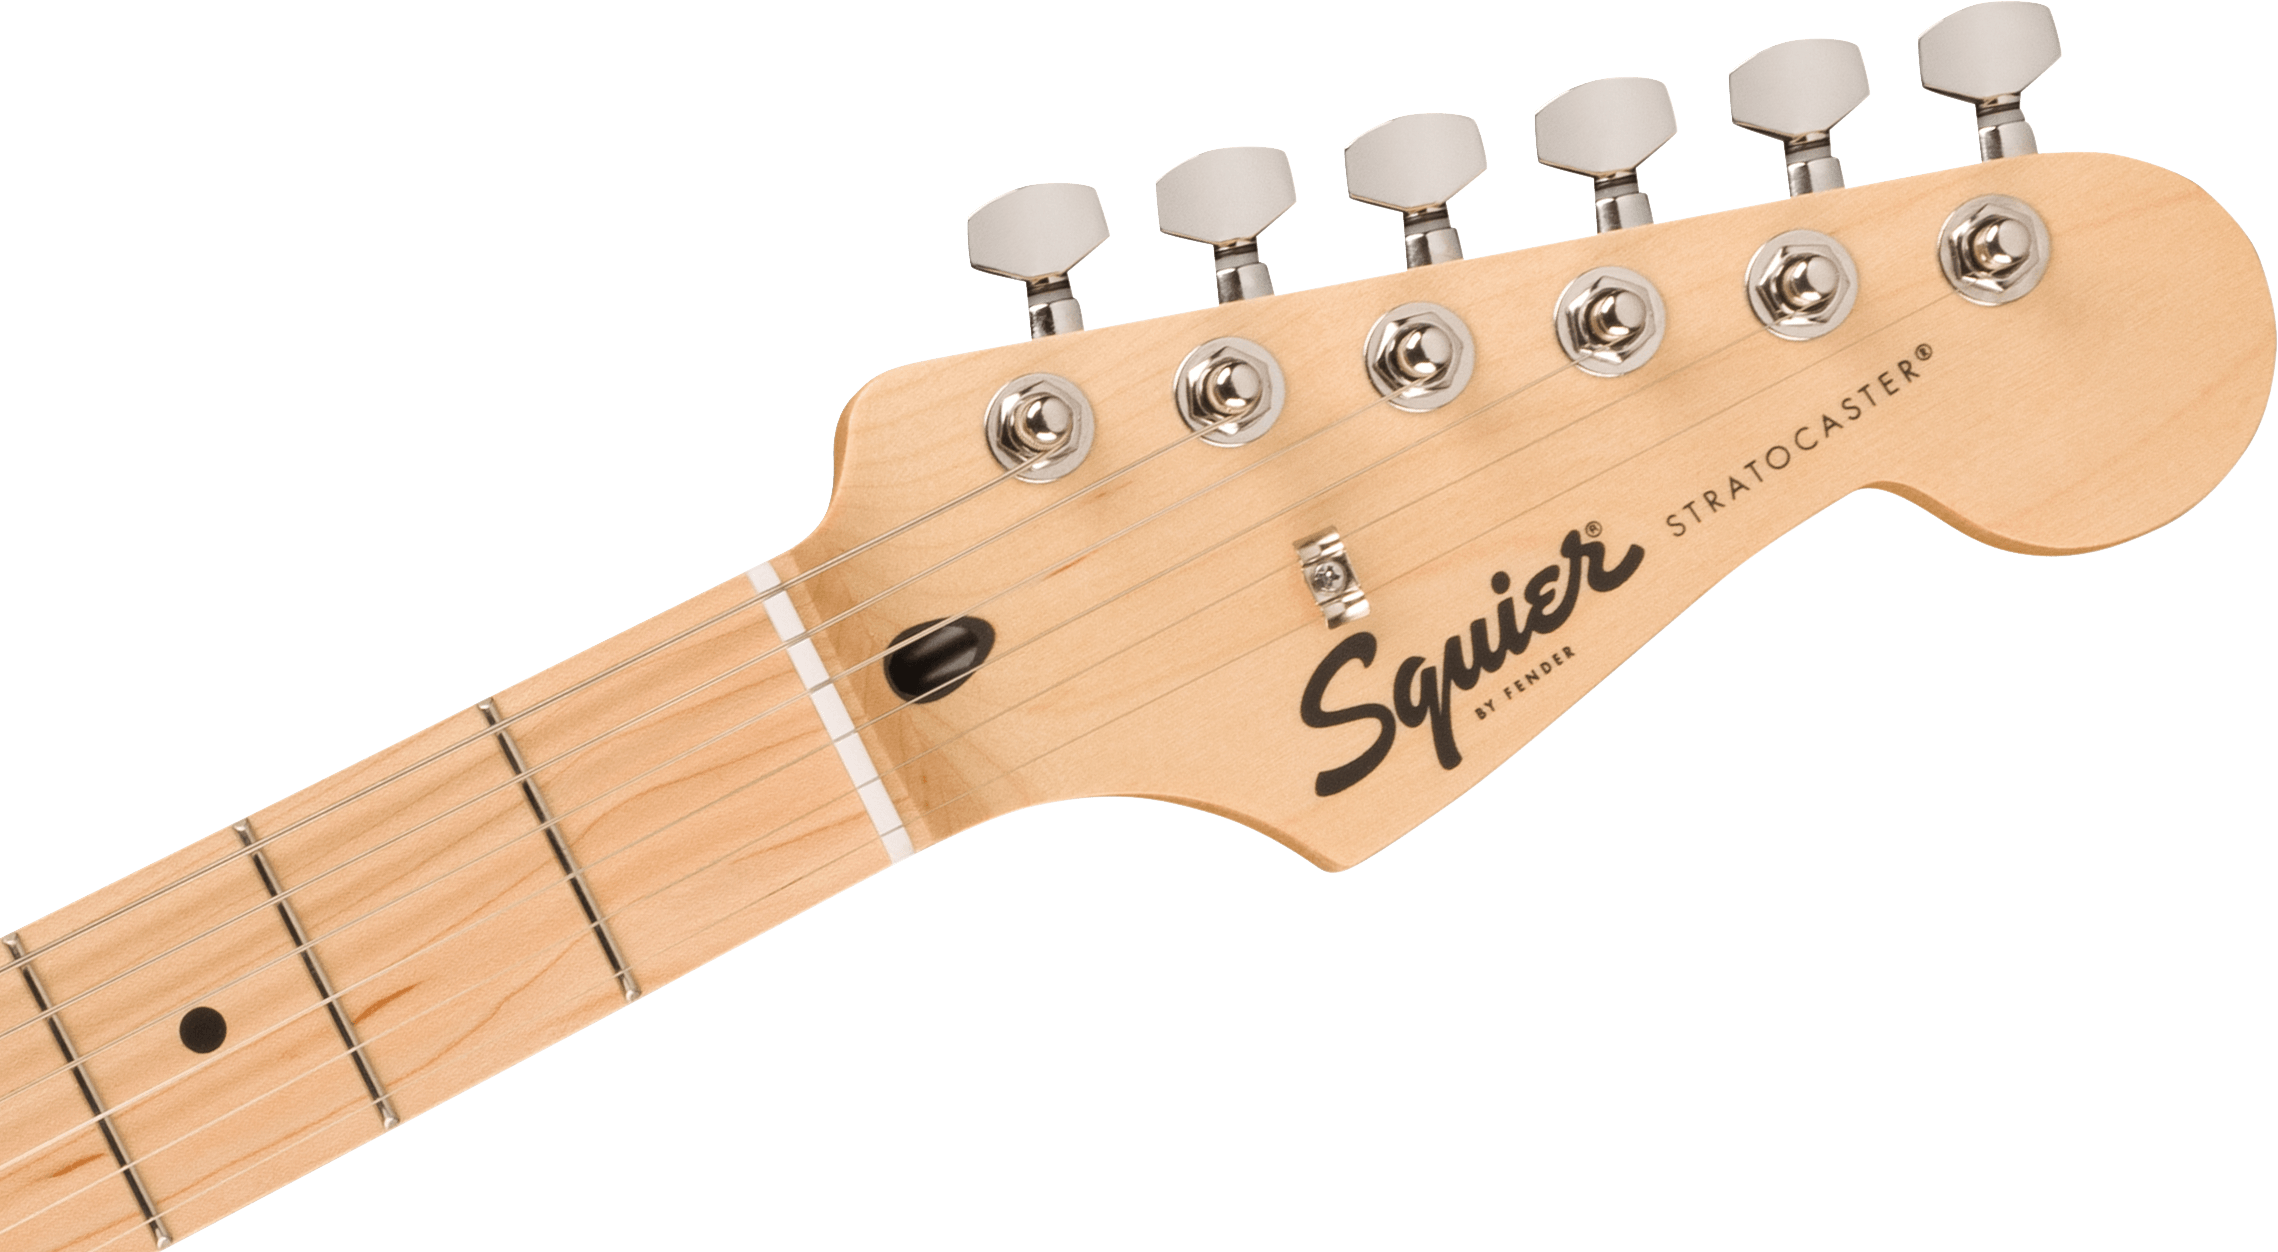 Squier FSR Squier Sonic® Stratocaster® HSS, Maple Fingerboard, Black Pickguard, 2-Color Sunburst